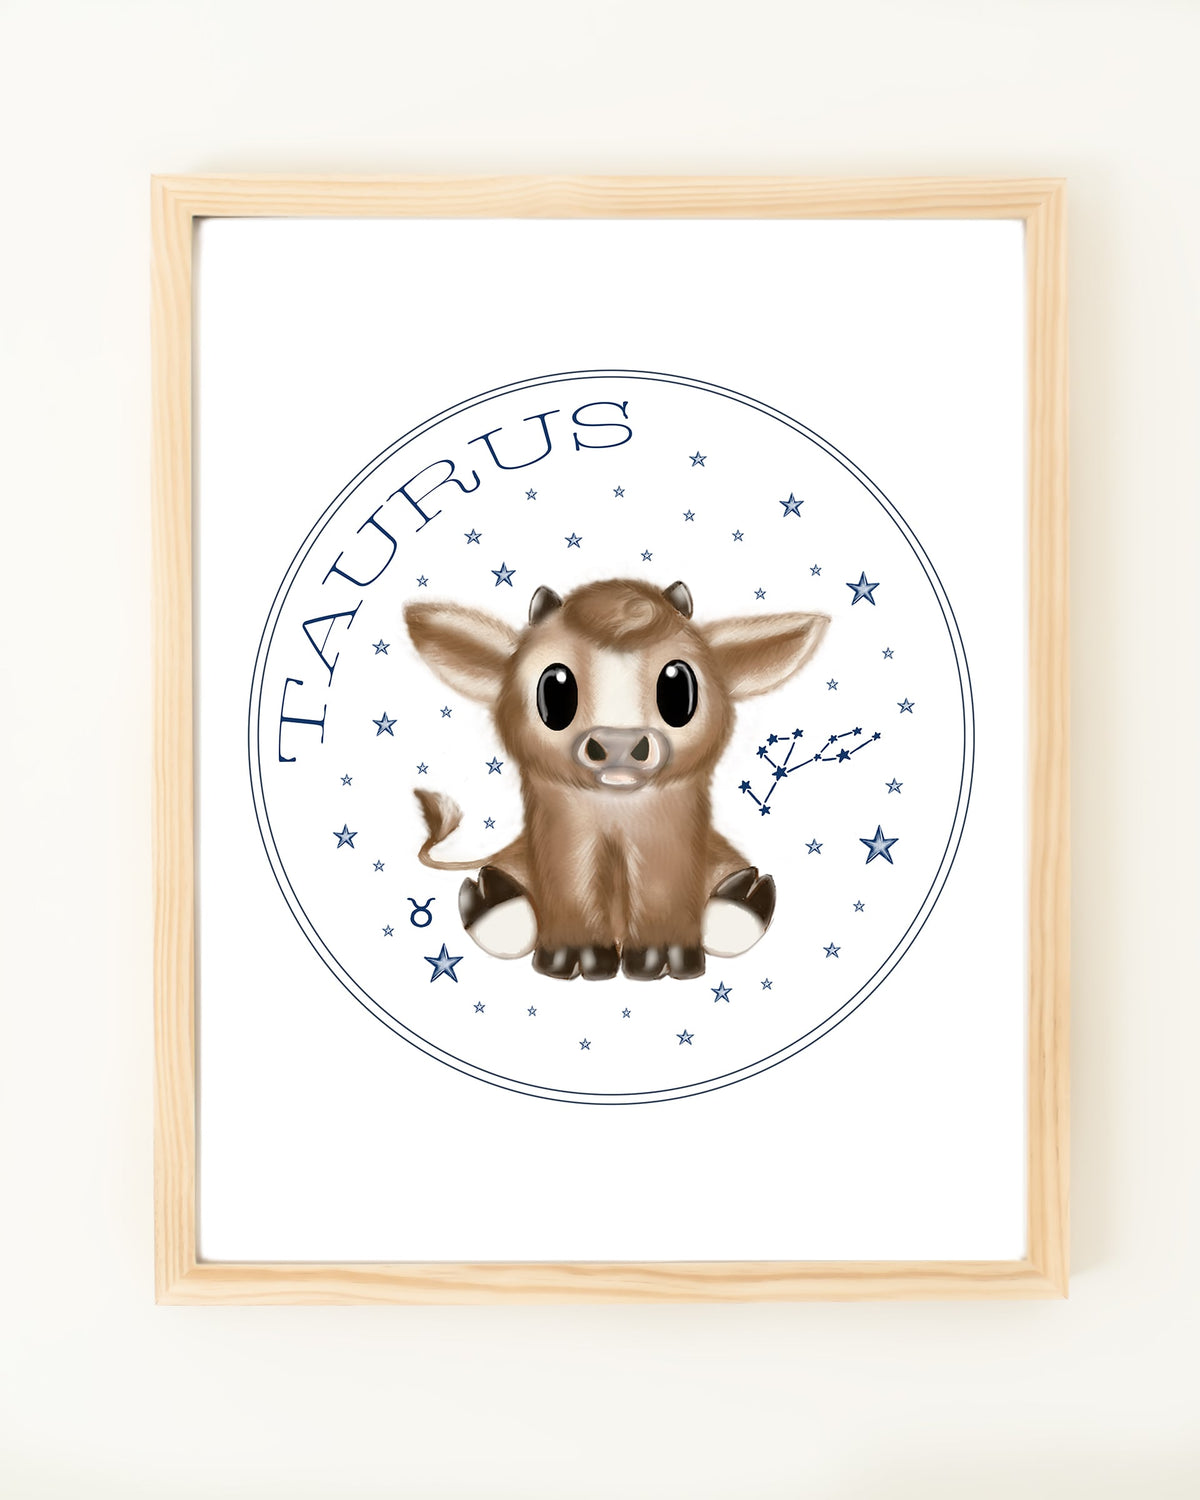 Framed hand drawn stars zodiac nursery decor wall art poster Taurus cute baby bull farm animal